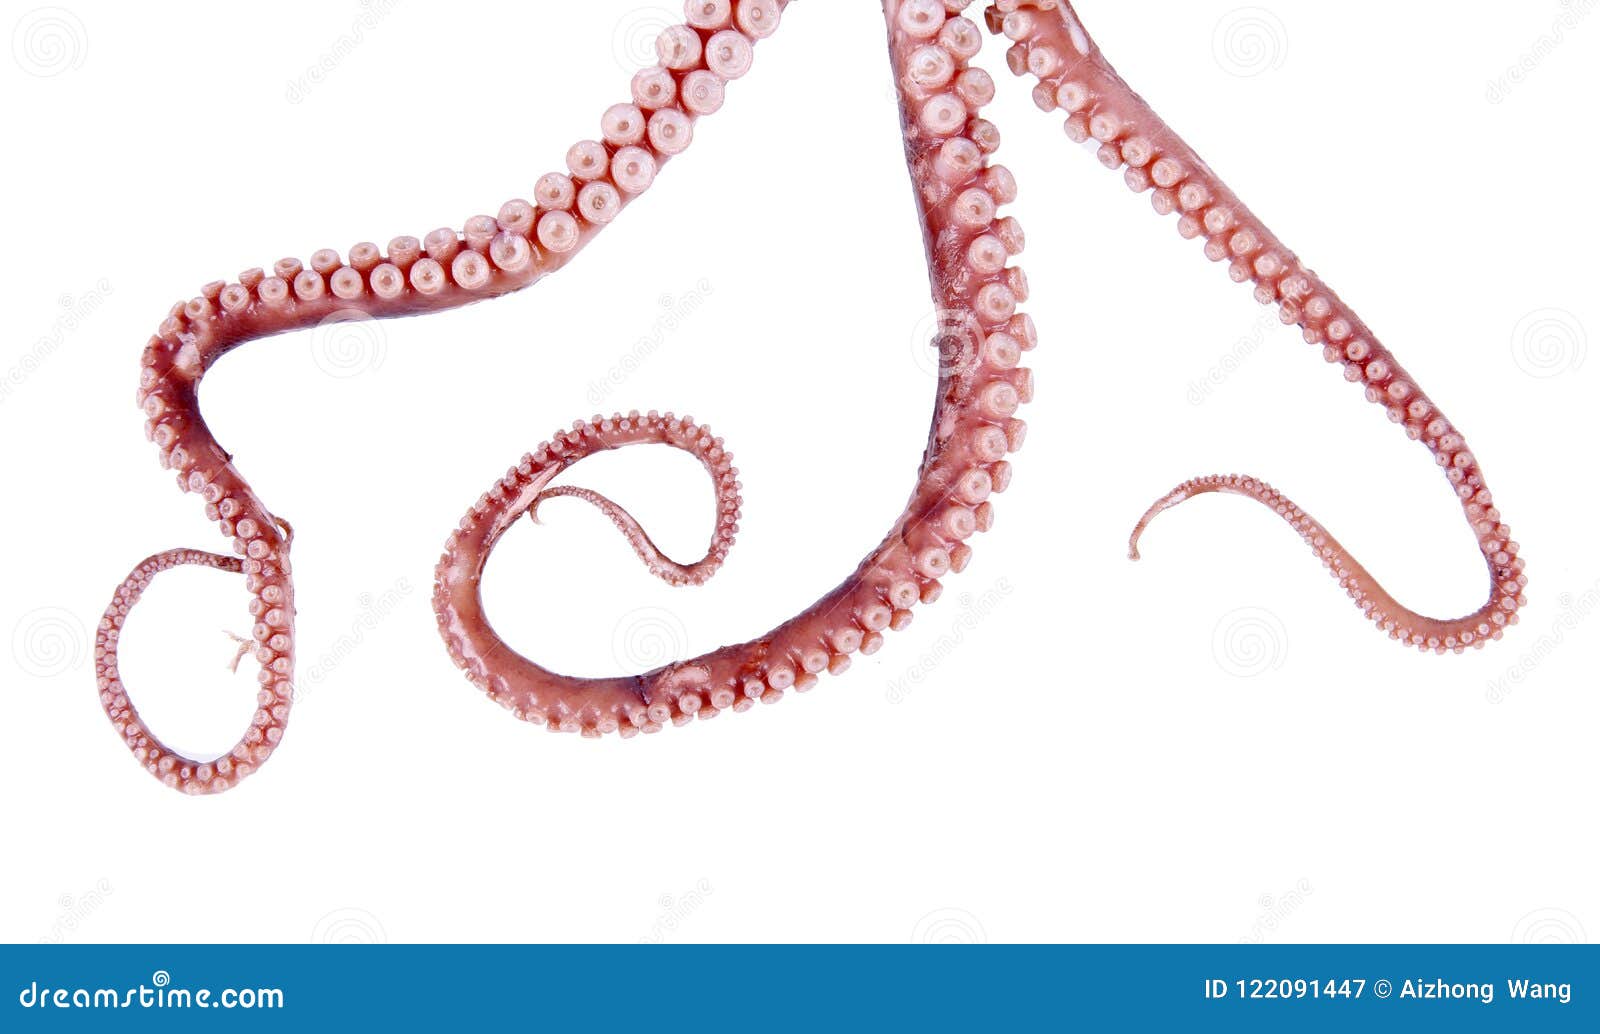 octopus tentacles